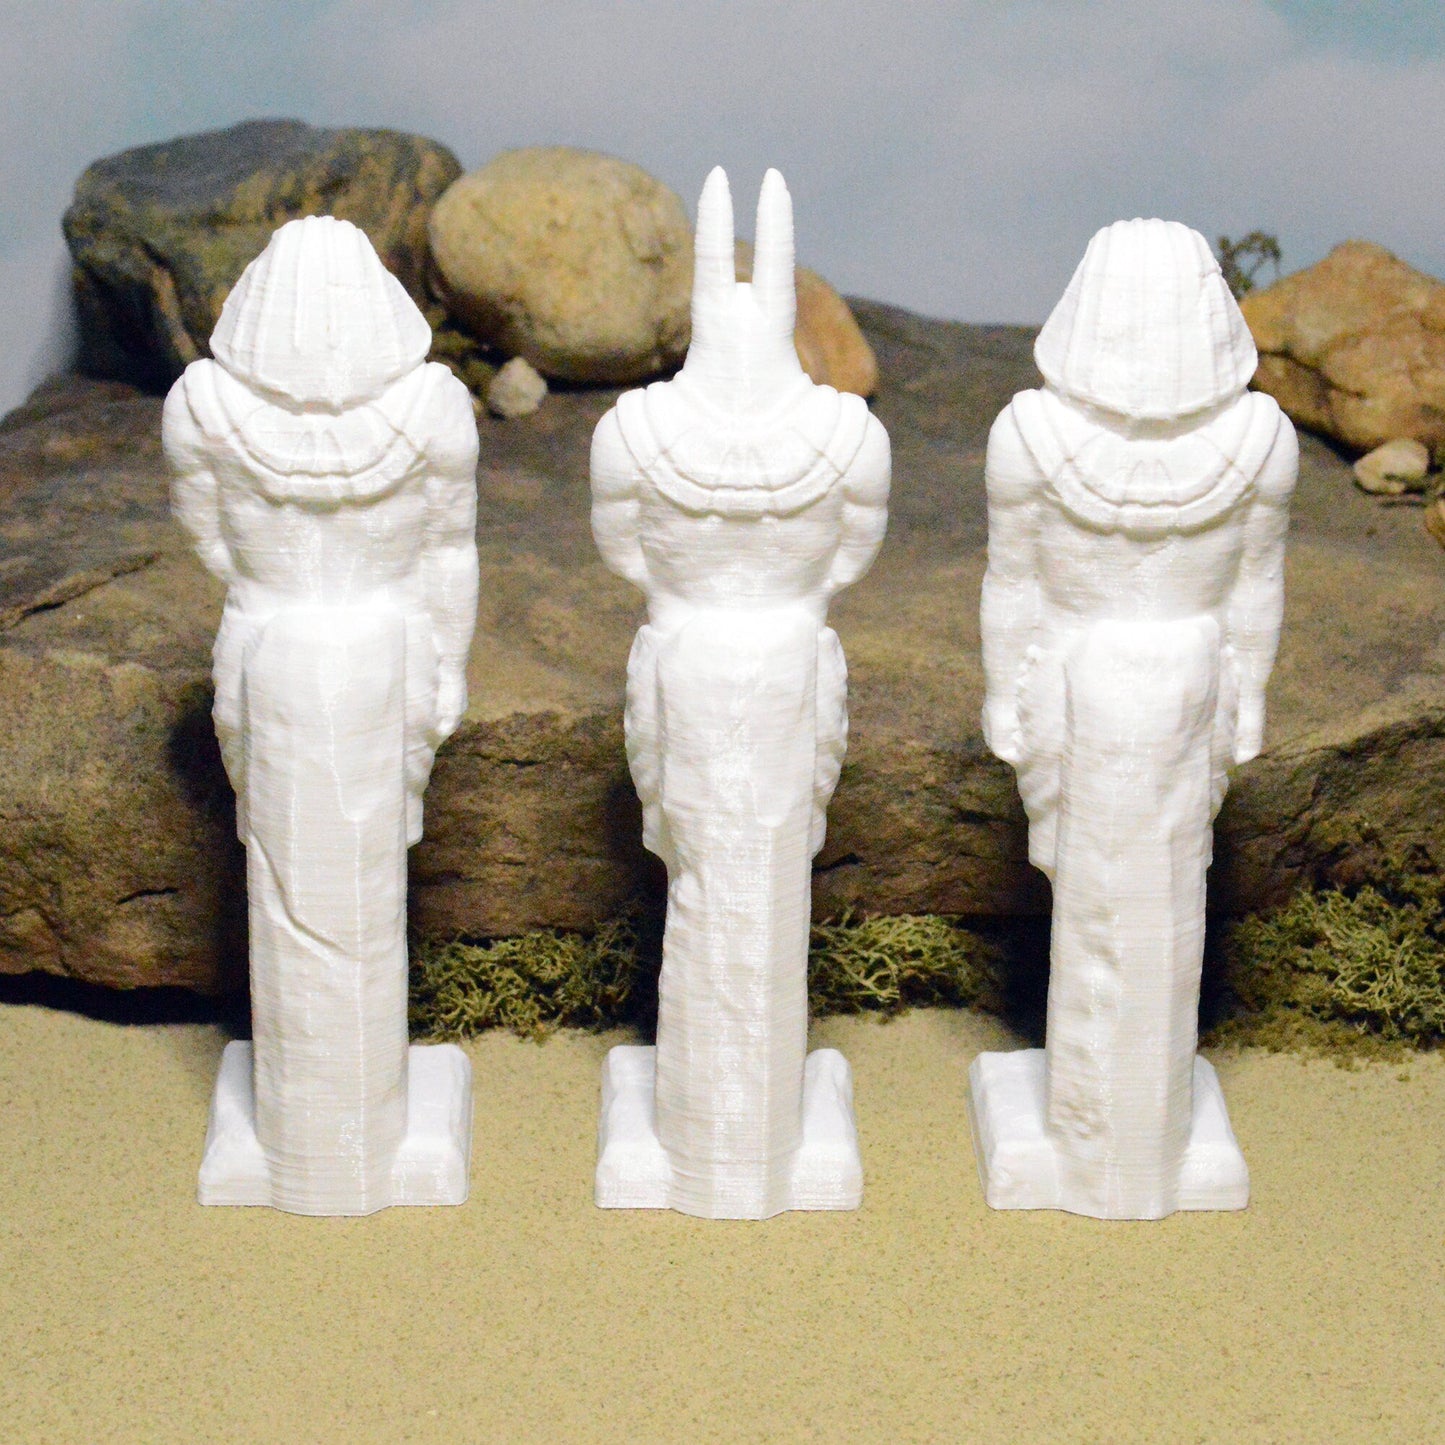 Temple Statues 15mm 28mm 32mm for D&D Terrain, DnD Pathfinder Desert, Scorching Sands, Egyptian Statues